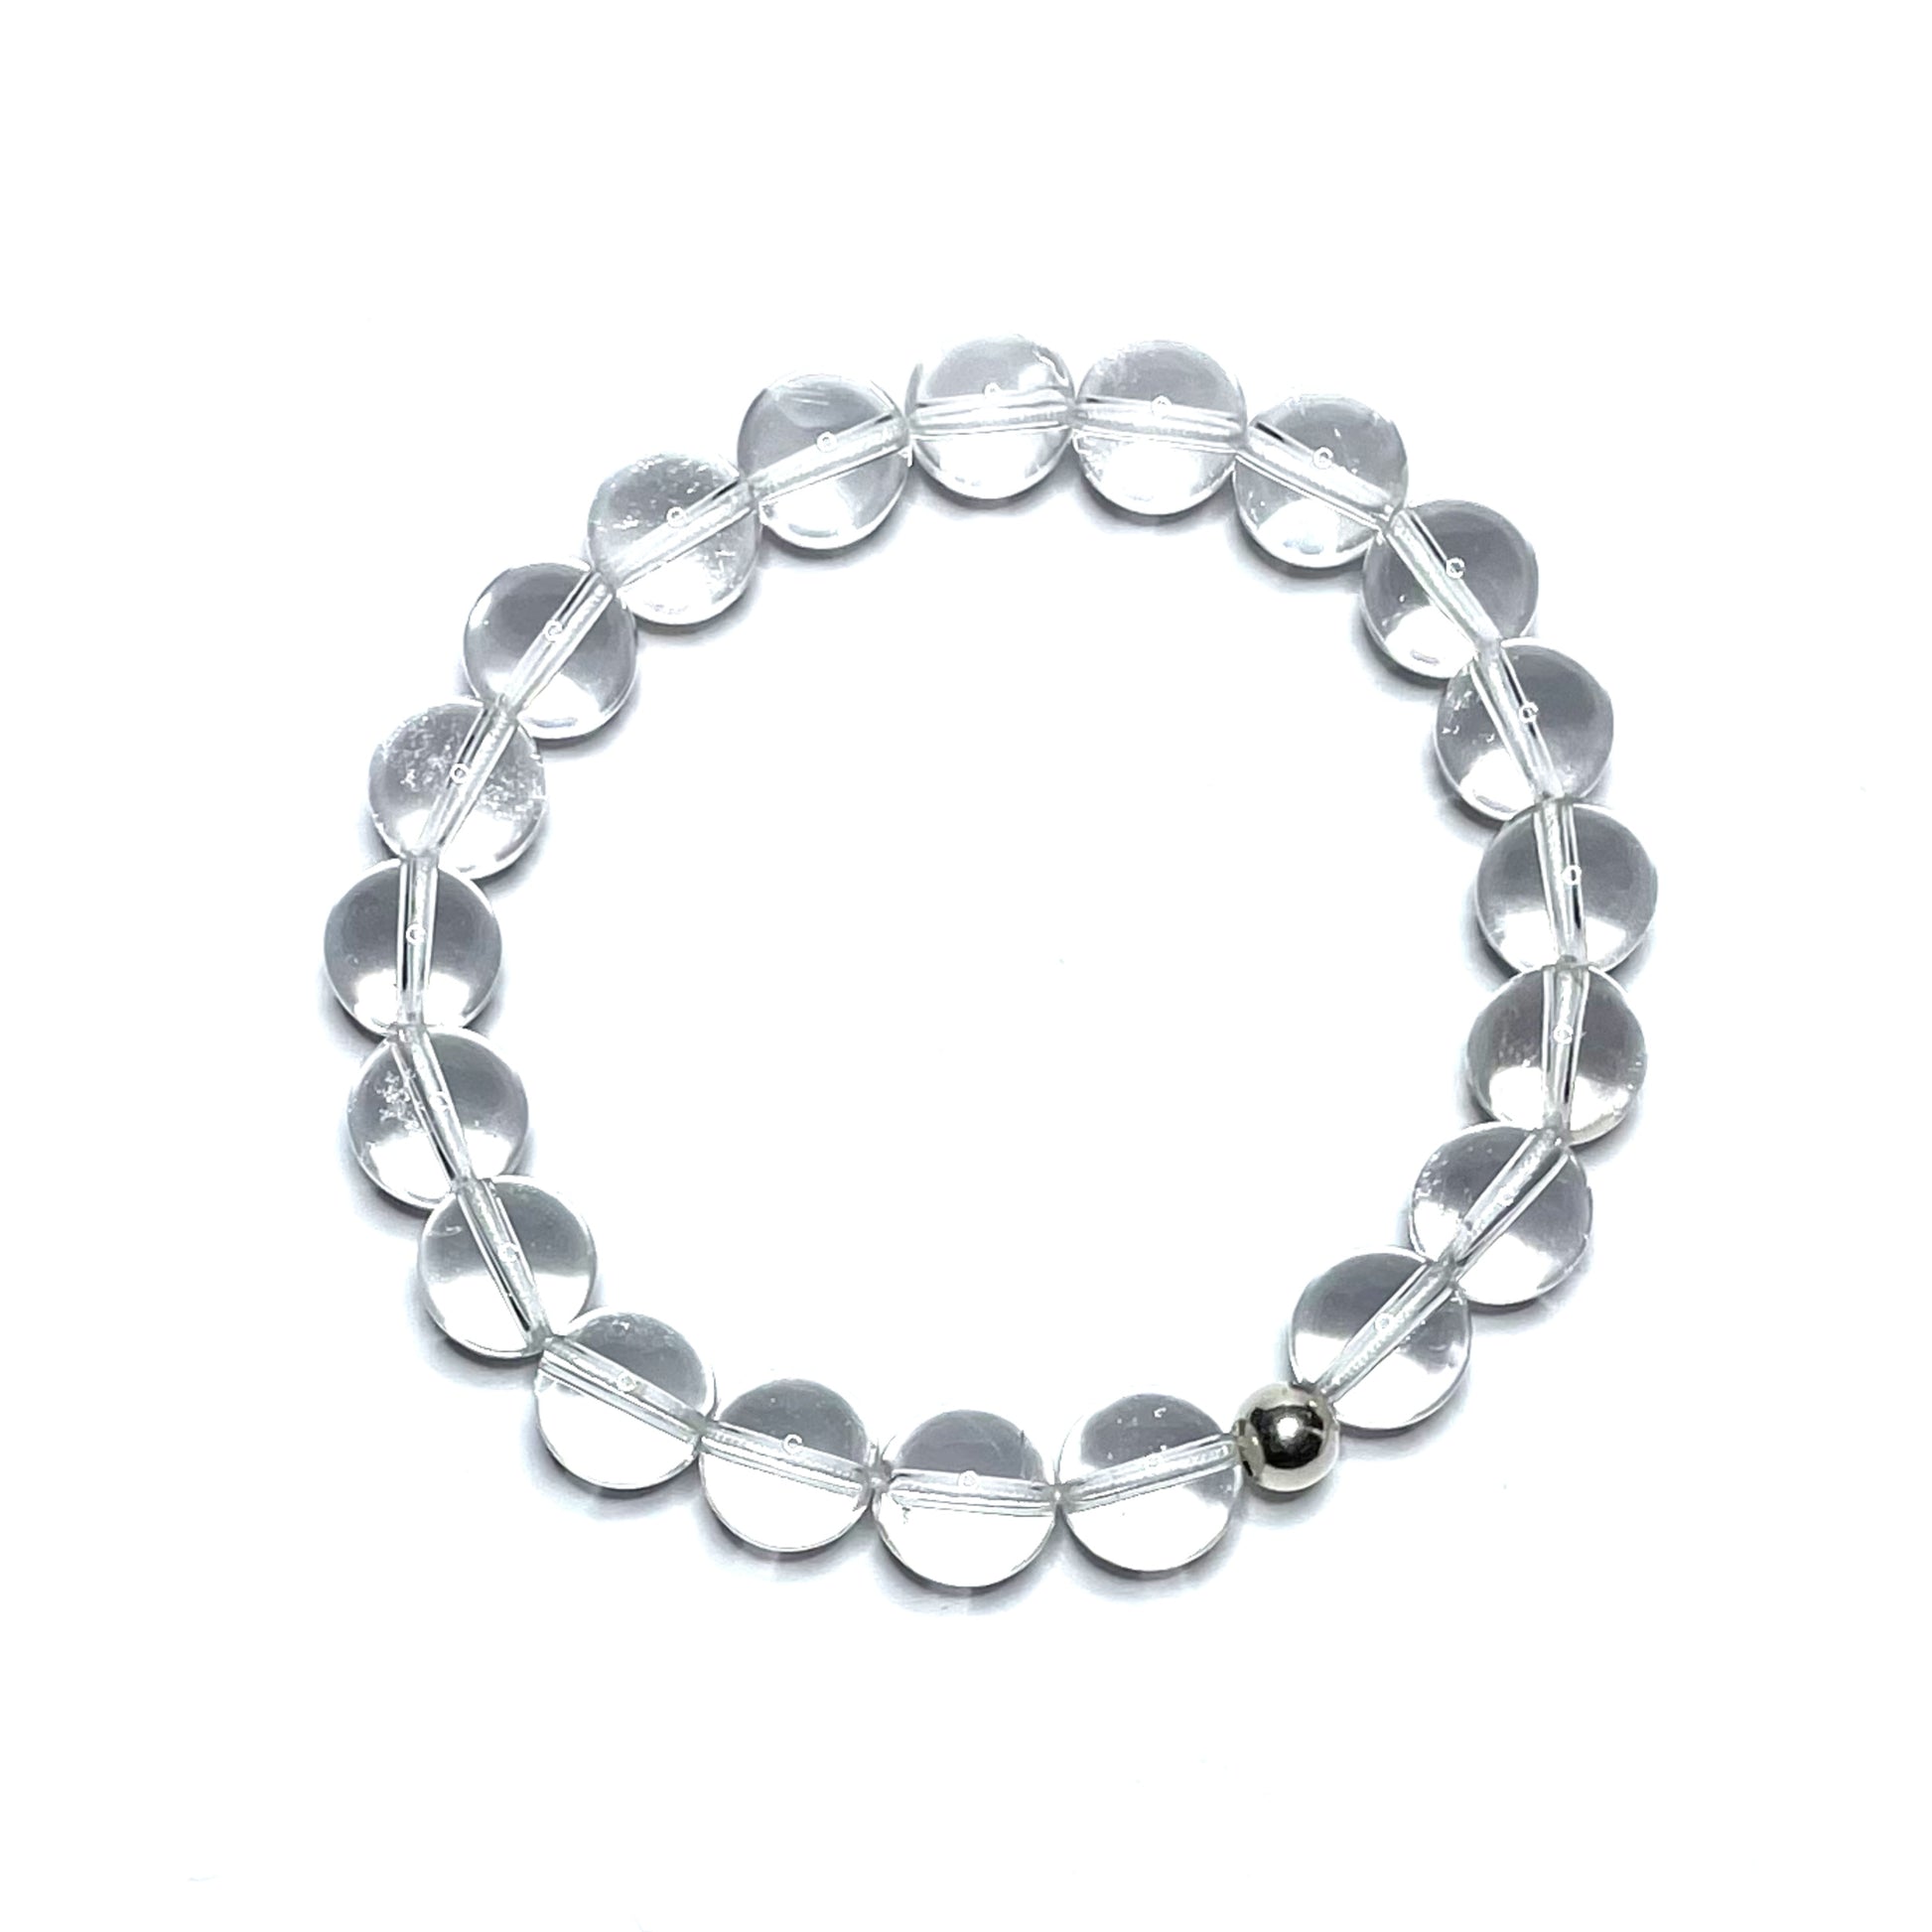 Clear quartz crystal bracelet